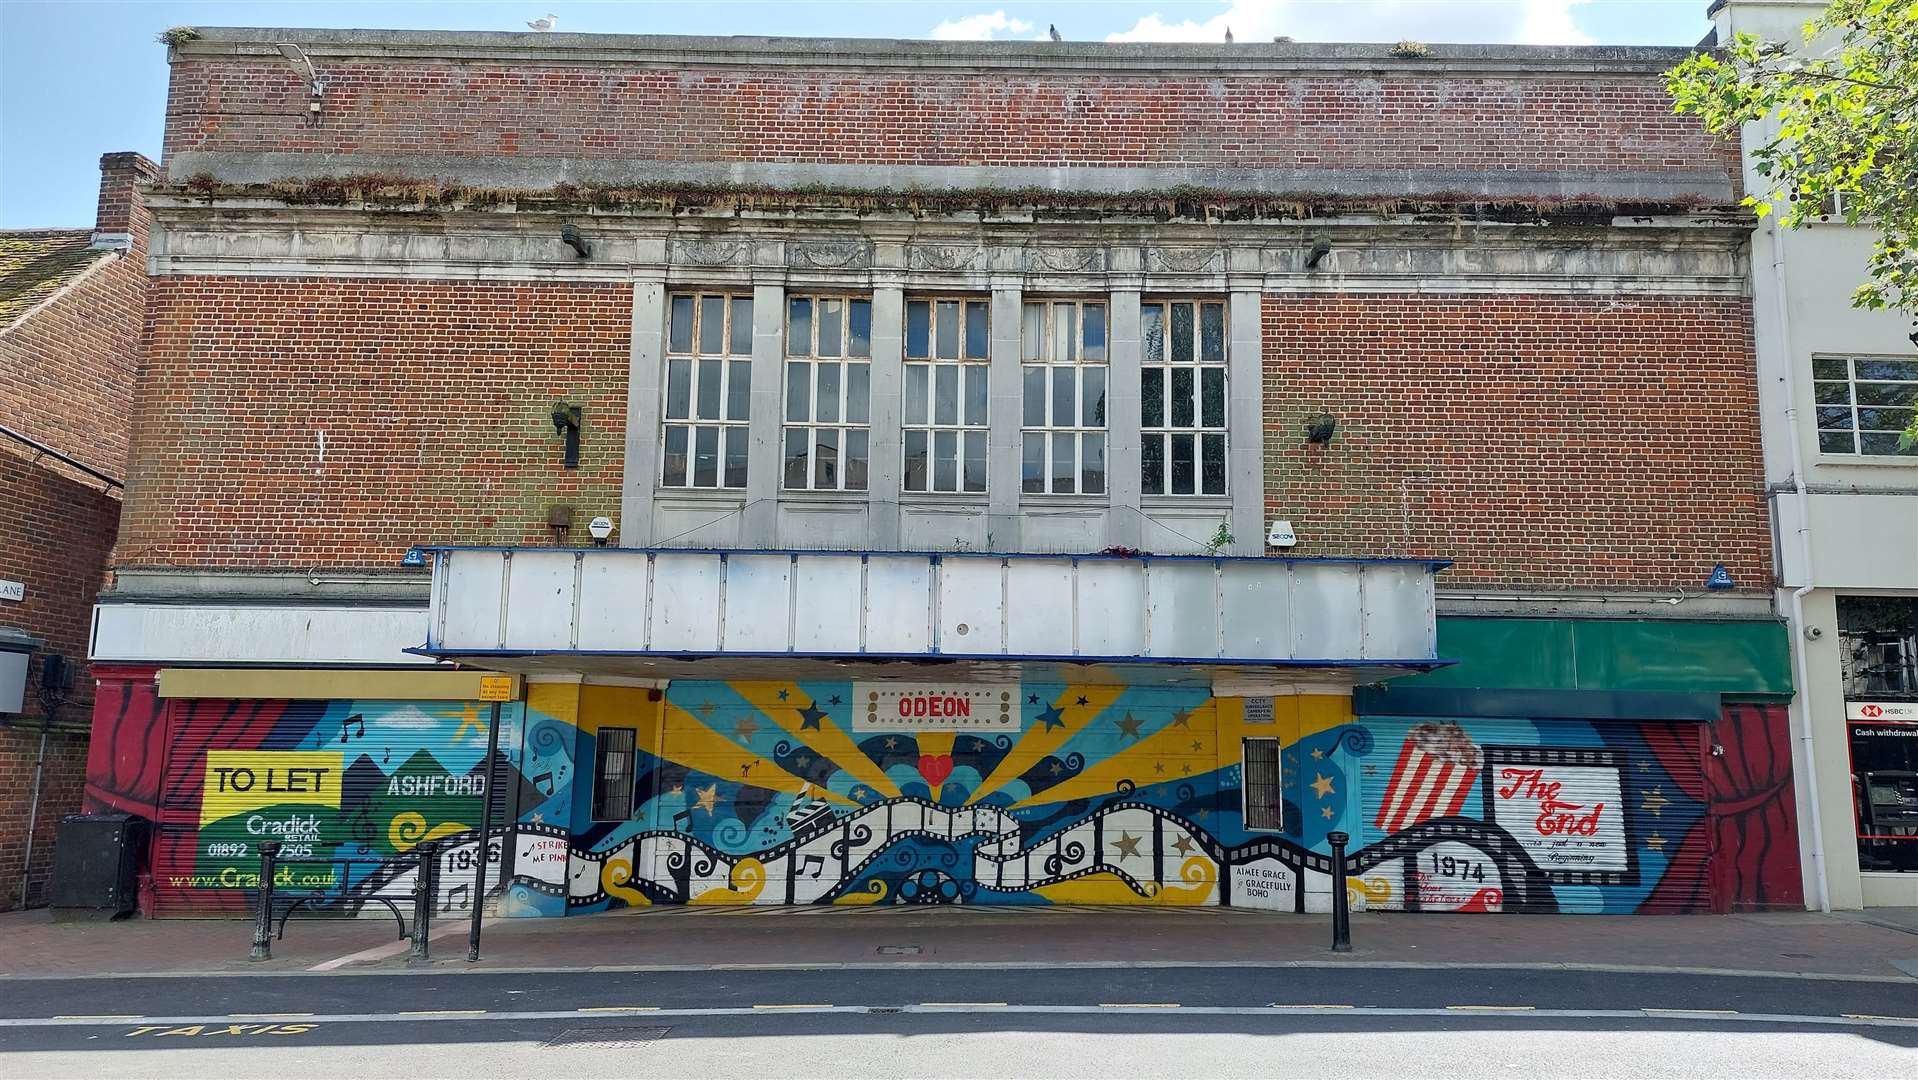 The former Mecca Bingo hall in Ashford’s Lower High Street